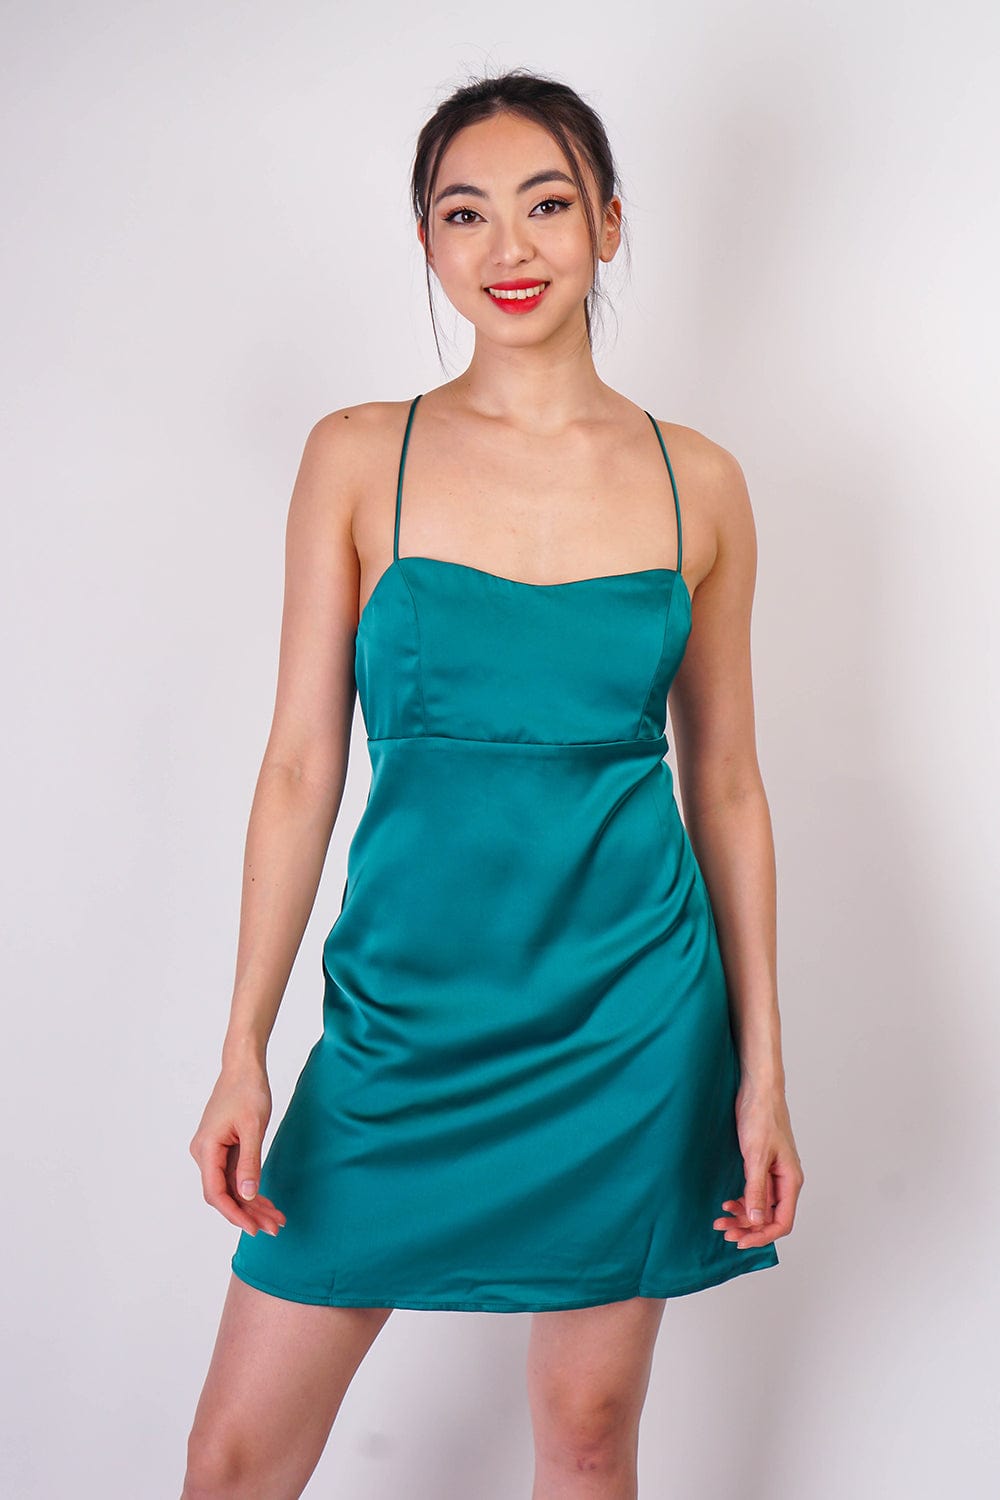 DCD DRESSES Emerald Satin Babydoll Bodice Mini Dress